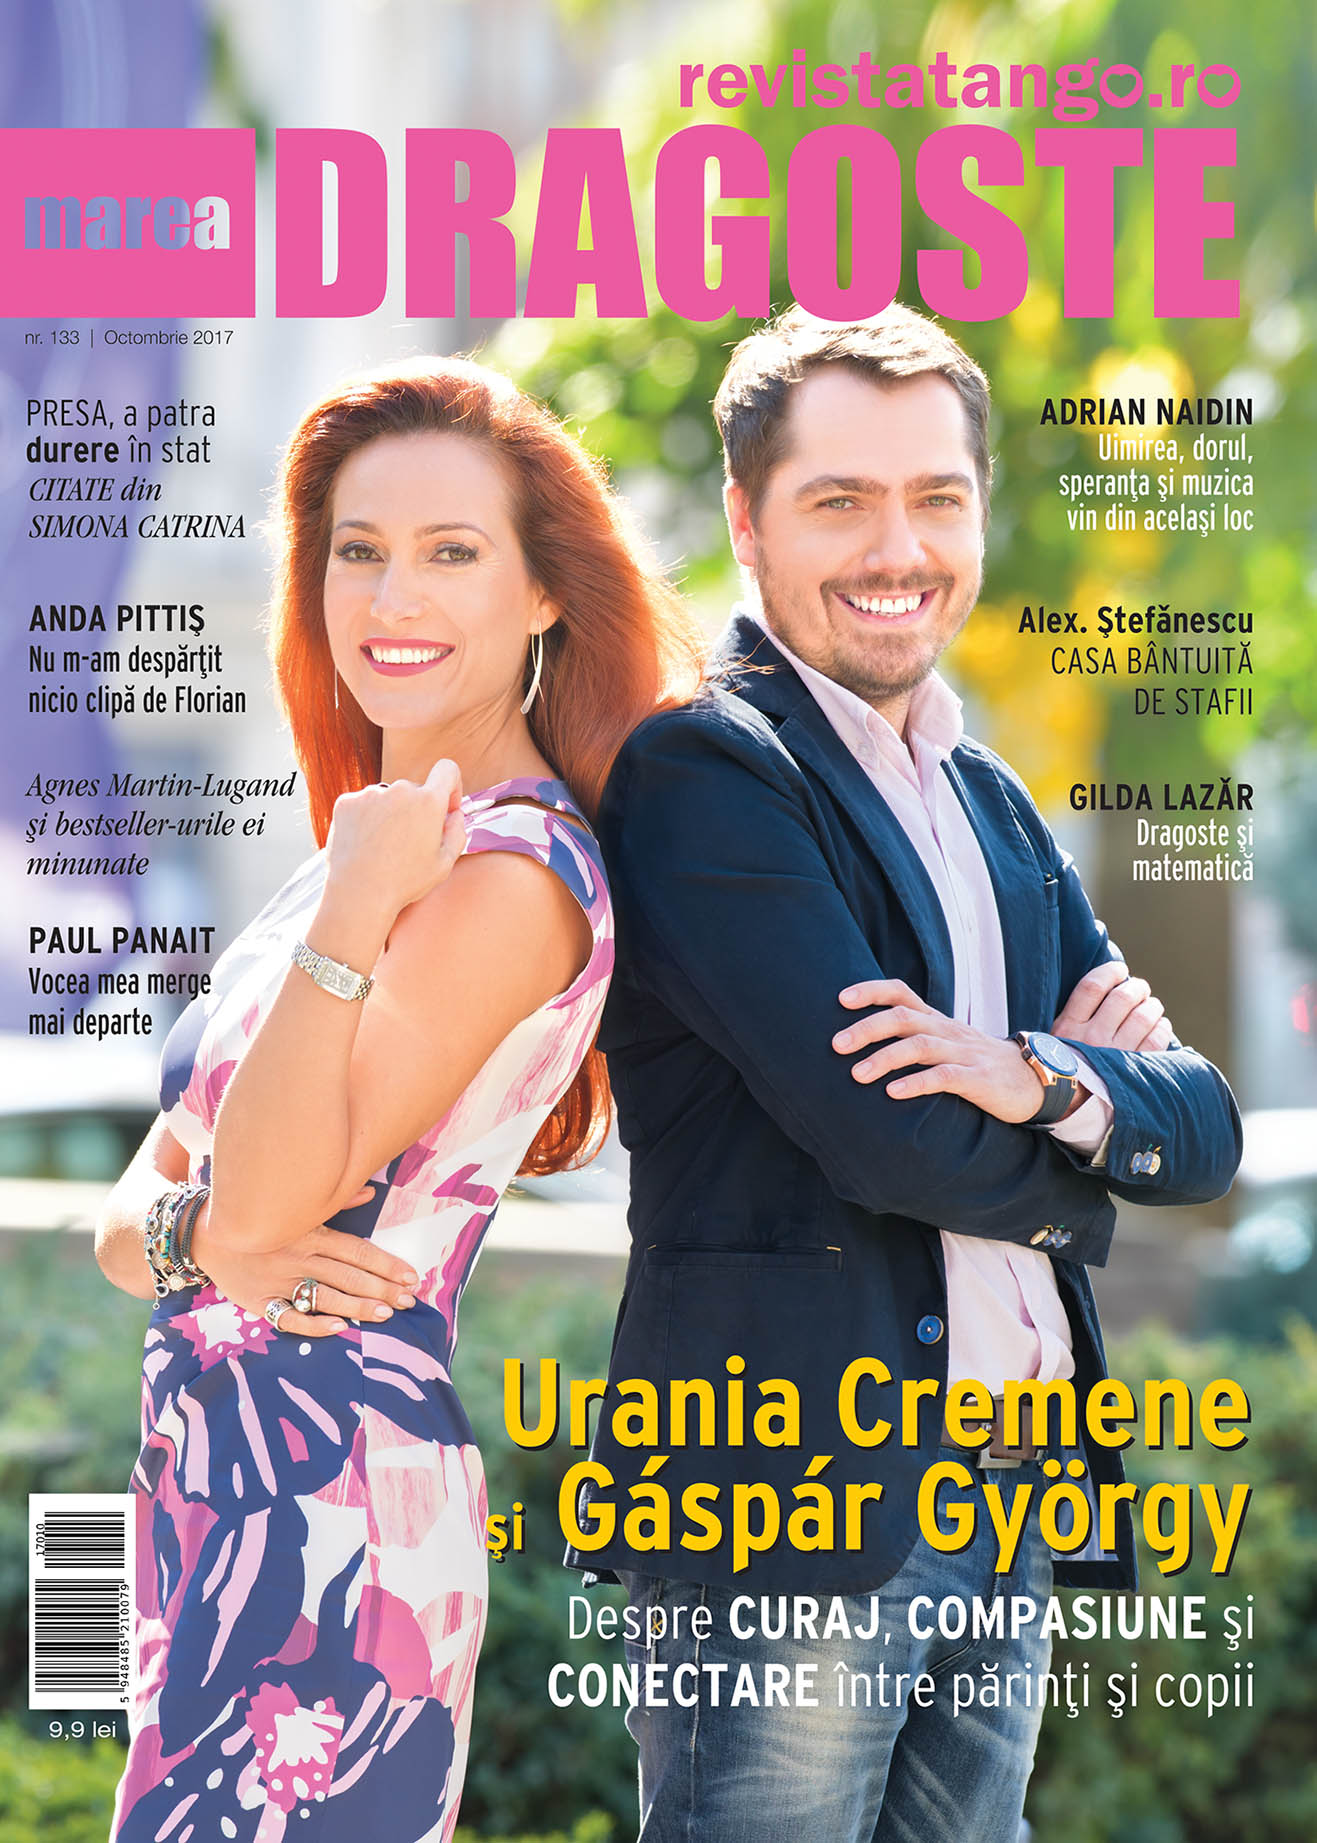 Gáspár György si Urania Cremene pe coperta Marea Dragoste-revistatango.ro, nr. 133, octombrie 2017